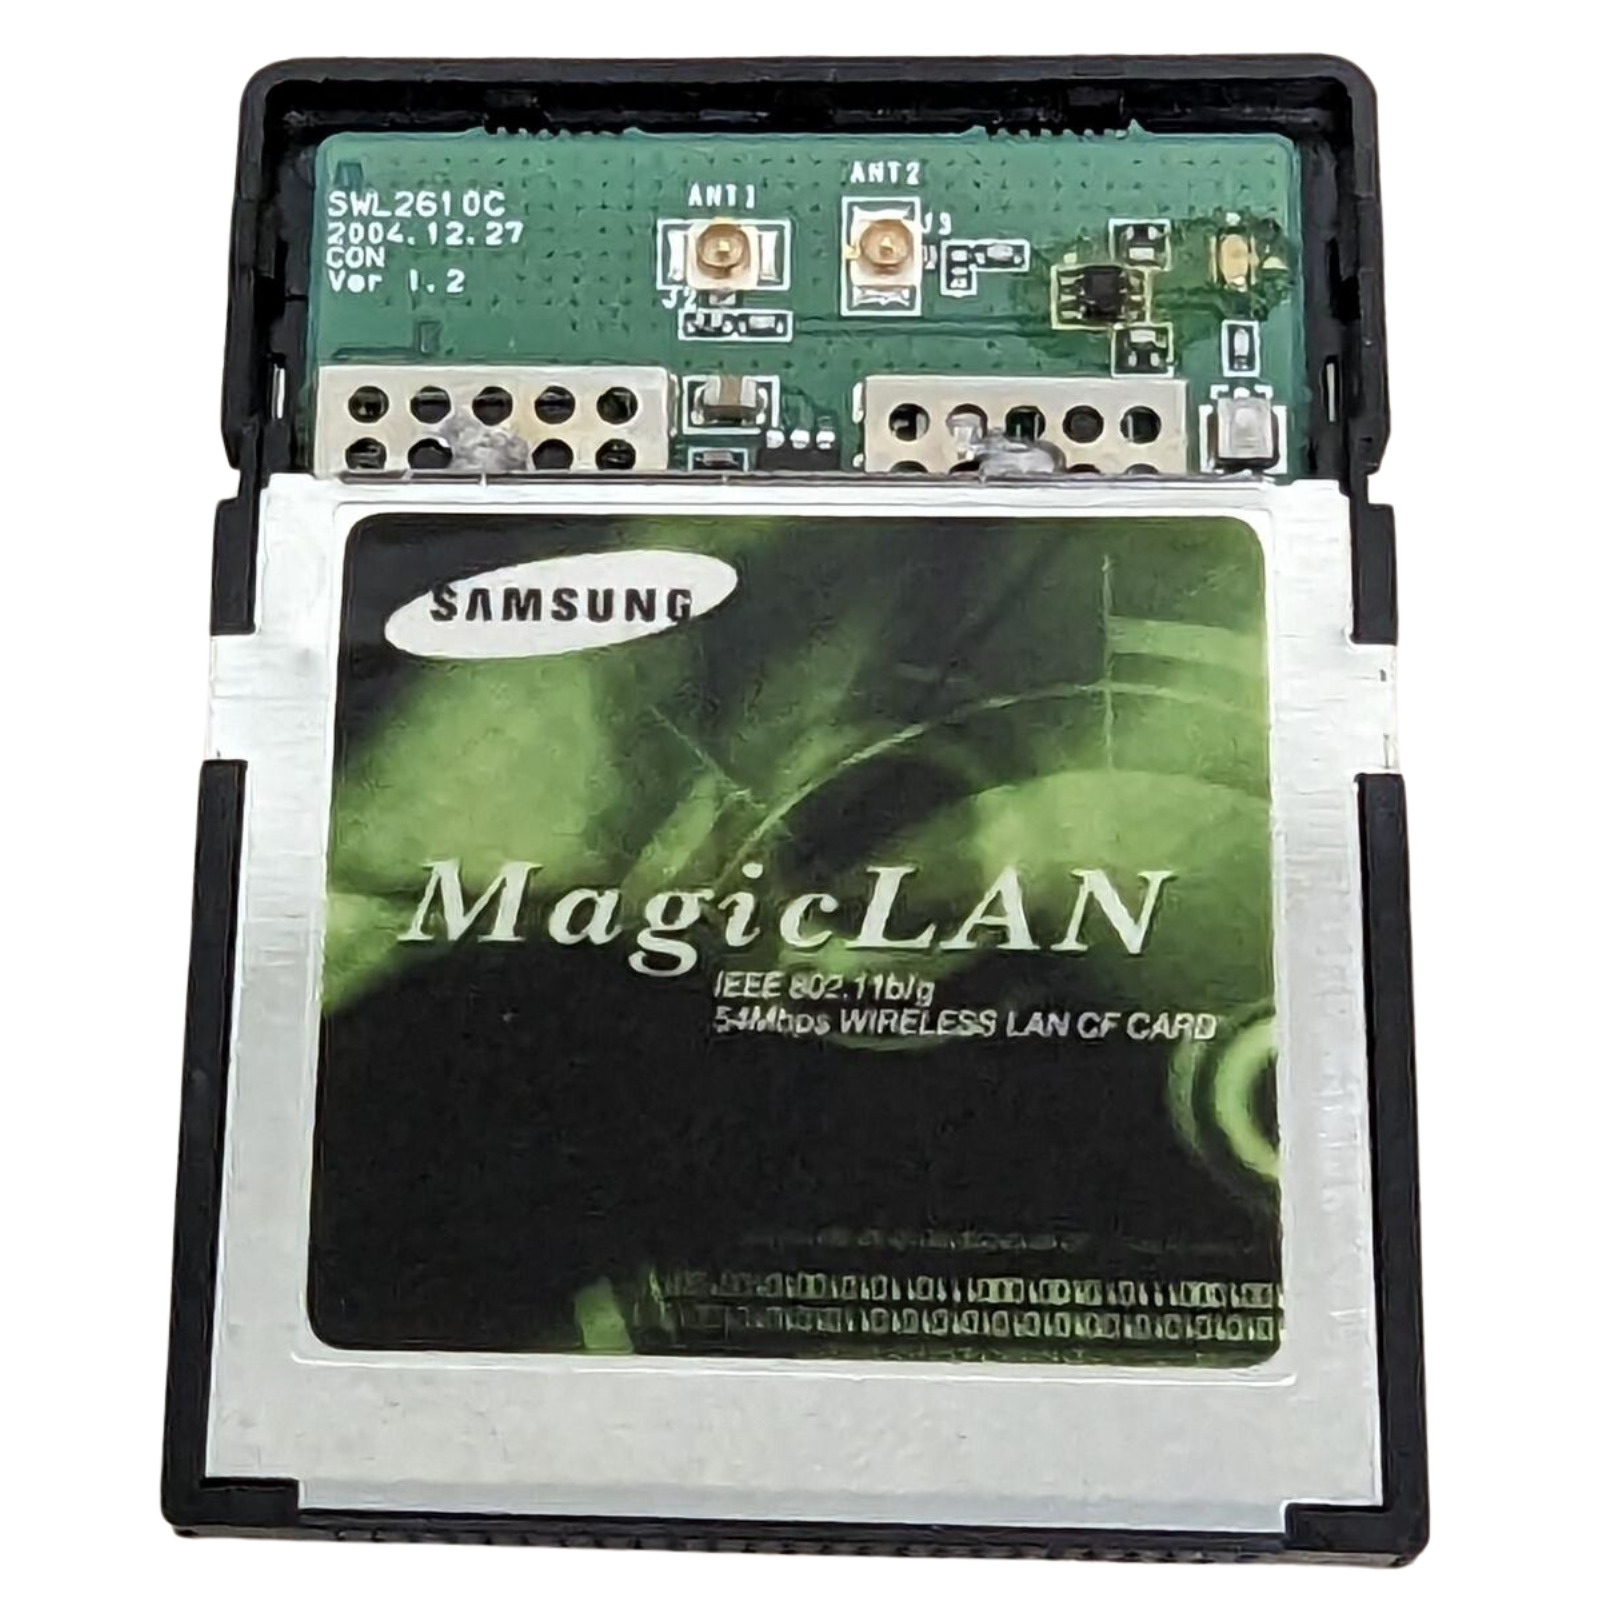 Samsung Radio: Model: SWL-2610C Samsung Compact Flash Radio Card 2.4 GHz 802.11g